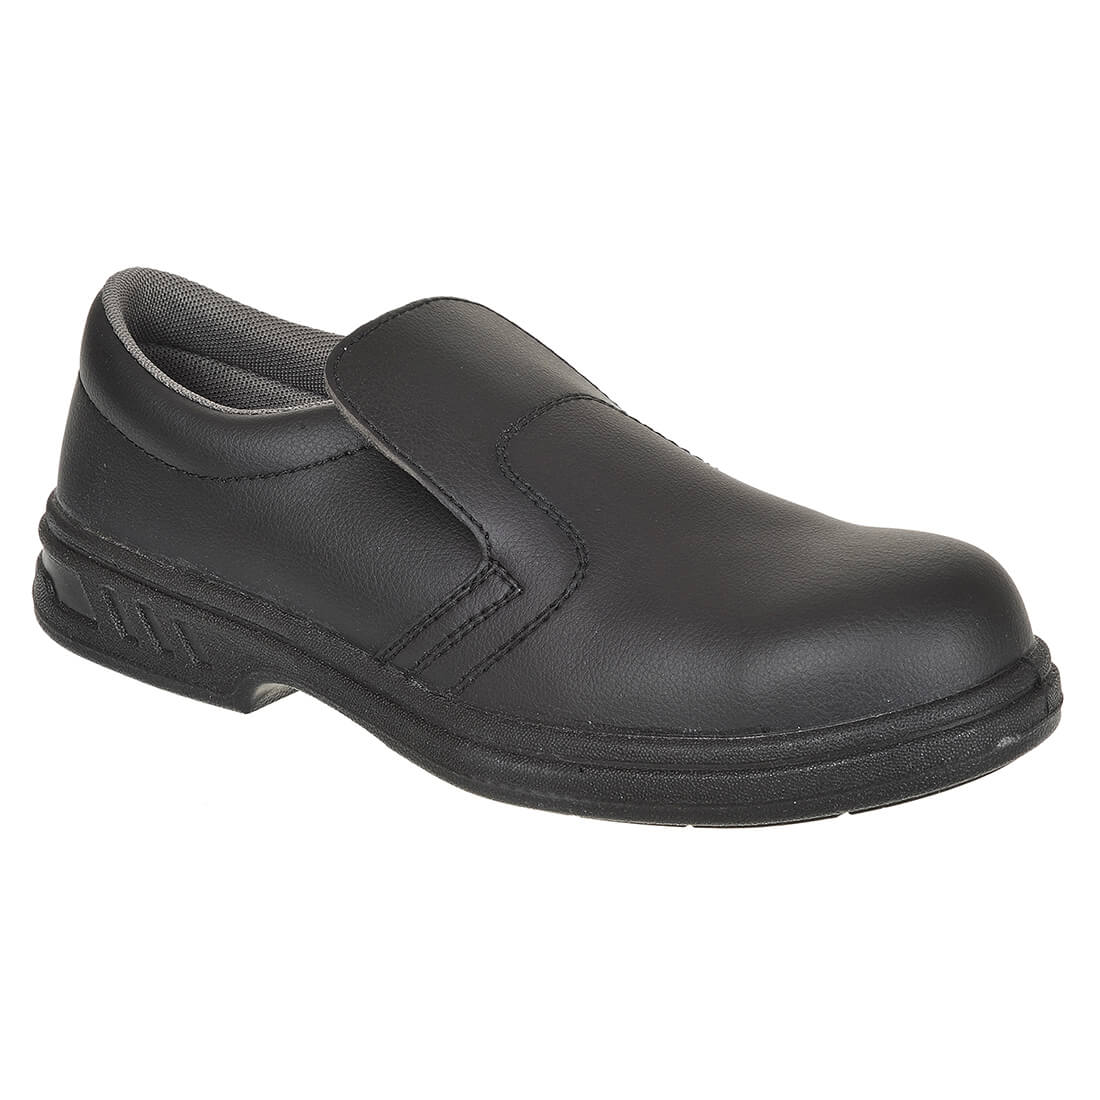 Portwest Steelite Slip On S2 Safety Shoes Black Size 7